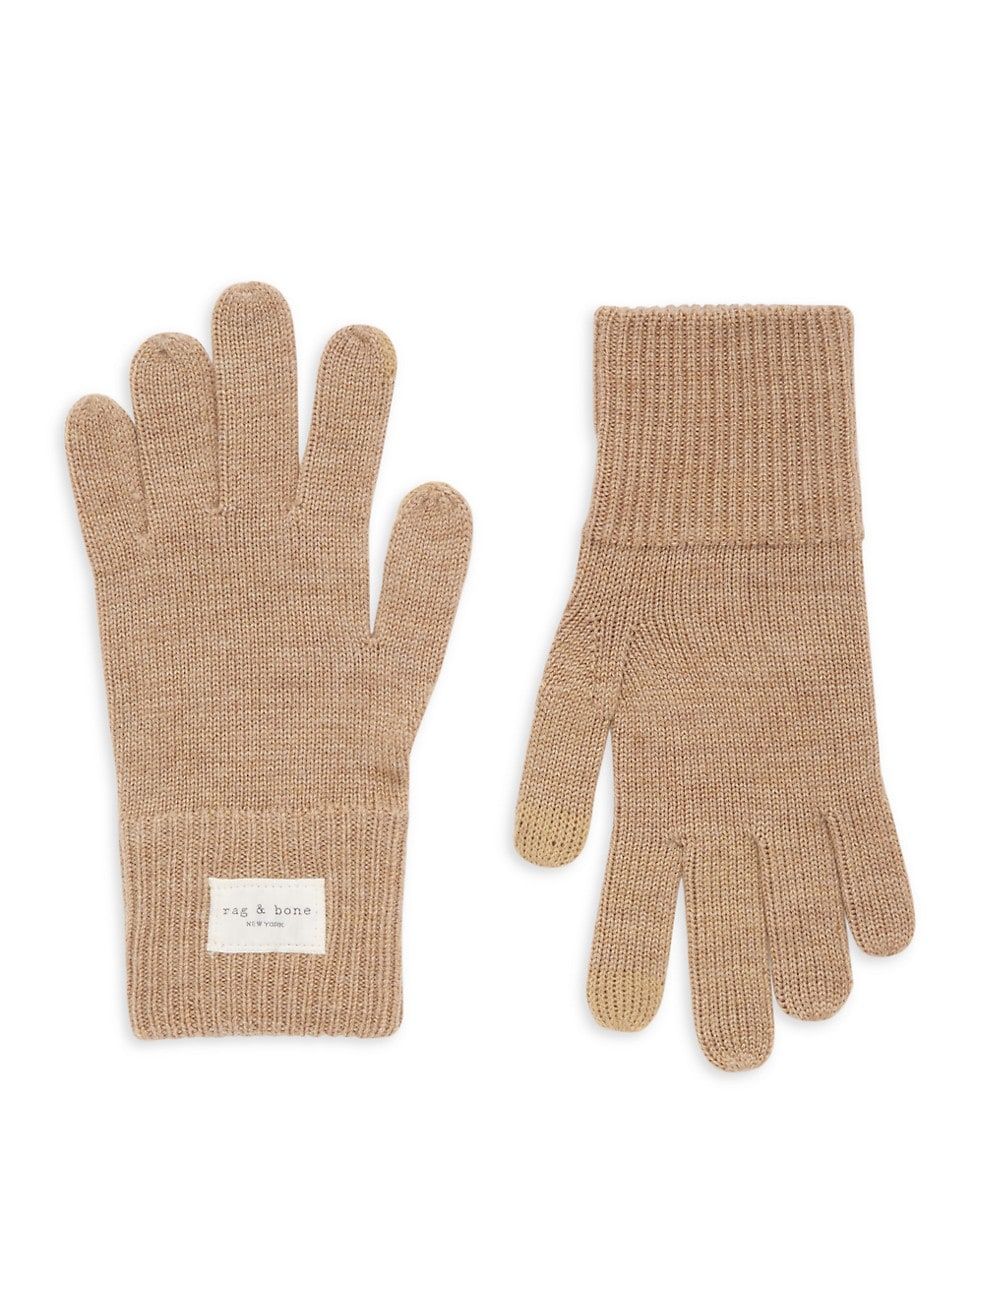 rag & bone Addison Wool Gloves | Saks Fifth Avenue